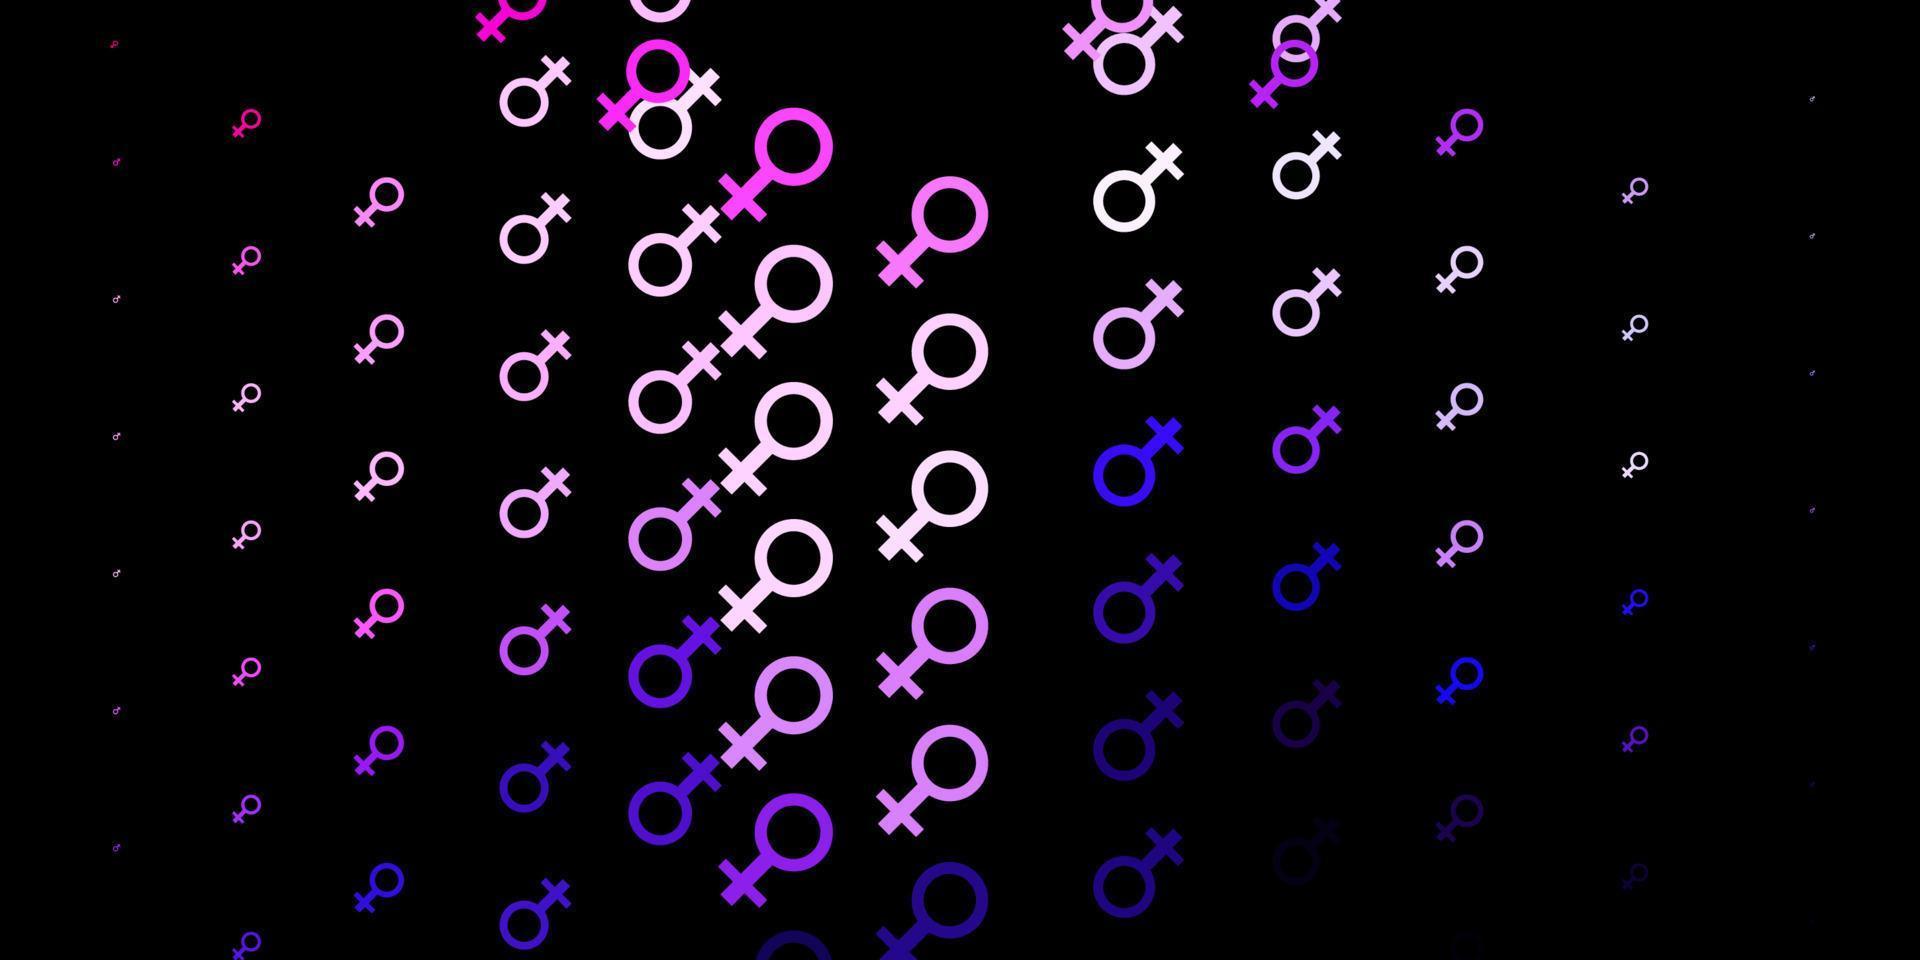 Dark Purple, Pink vector backdrop with woman's power symbols.